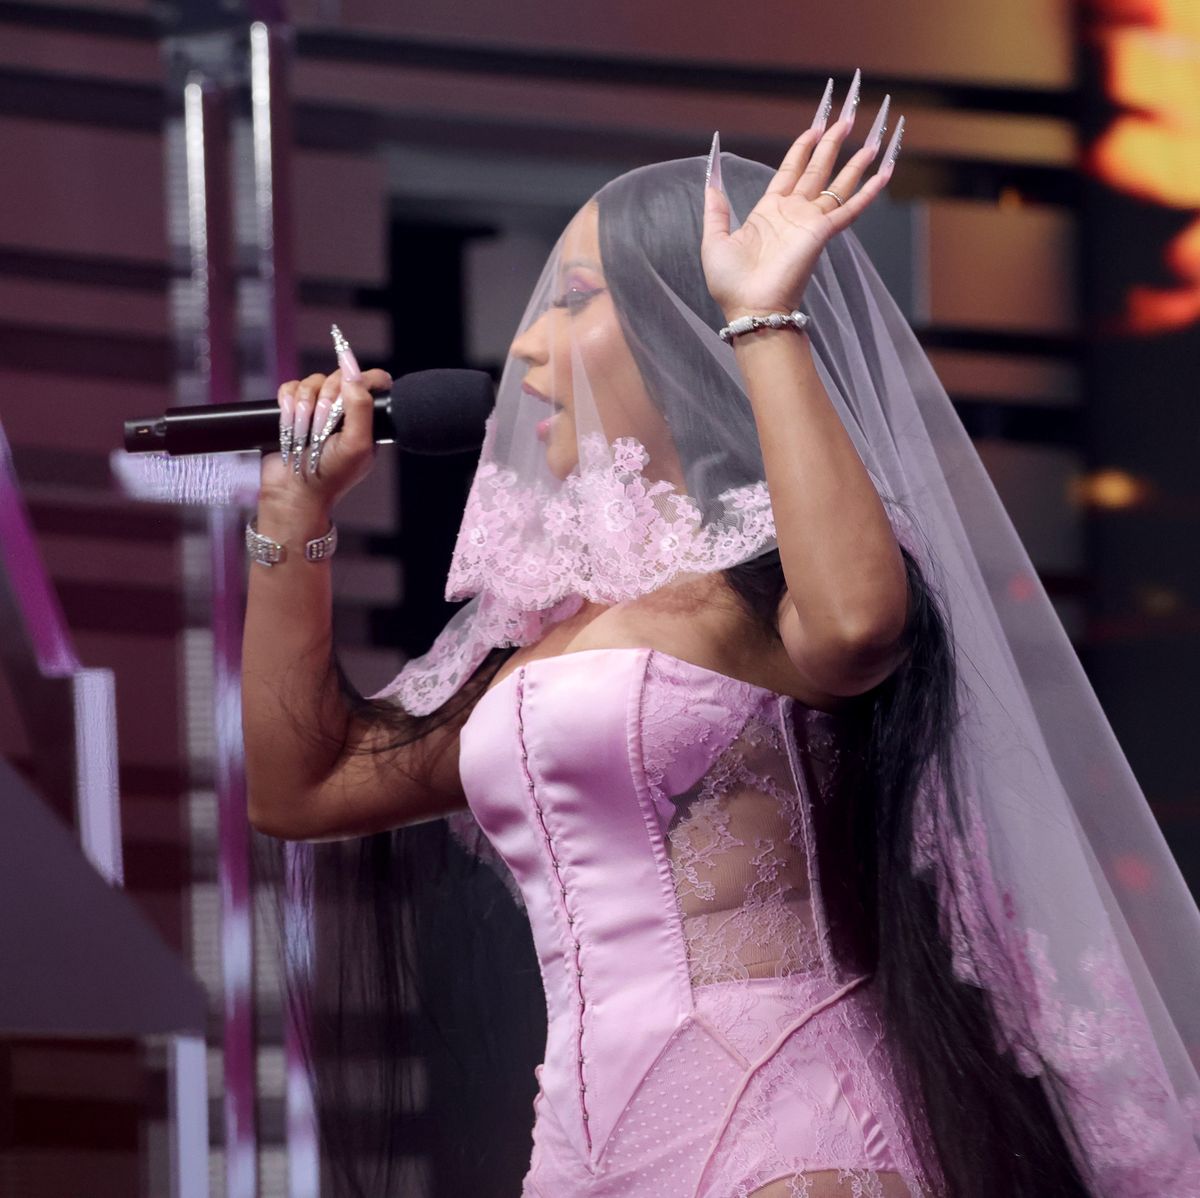 Watch Nicki Minaj's Performance of "Last Time I Saw You" at 2023 VMAs